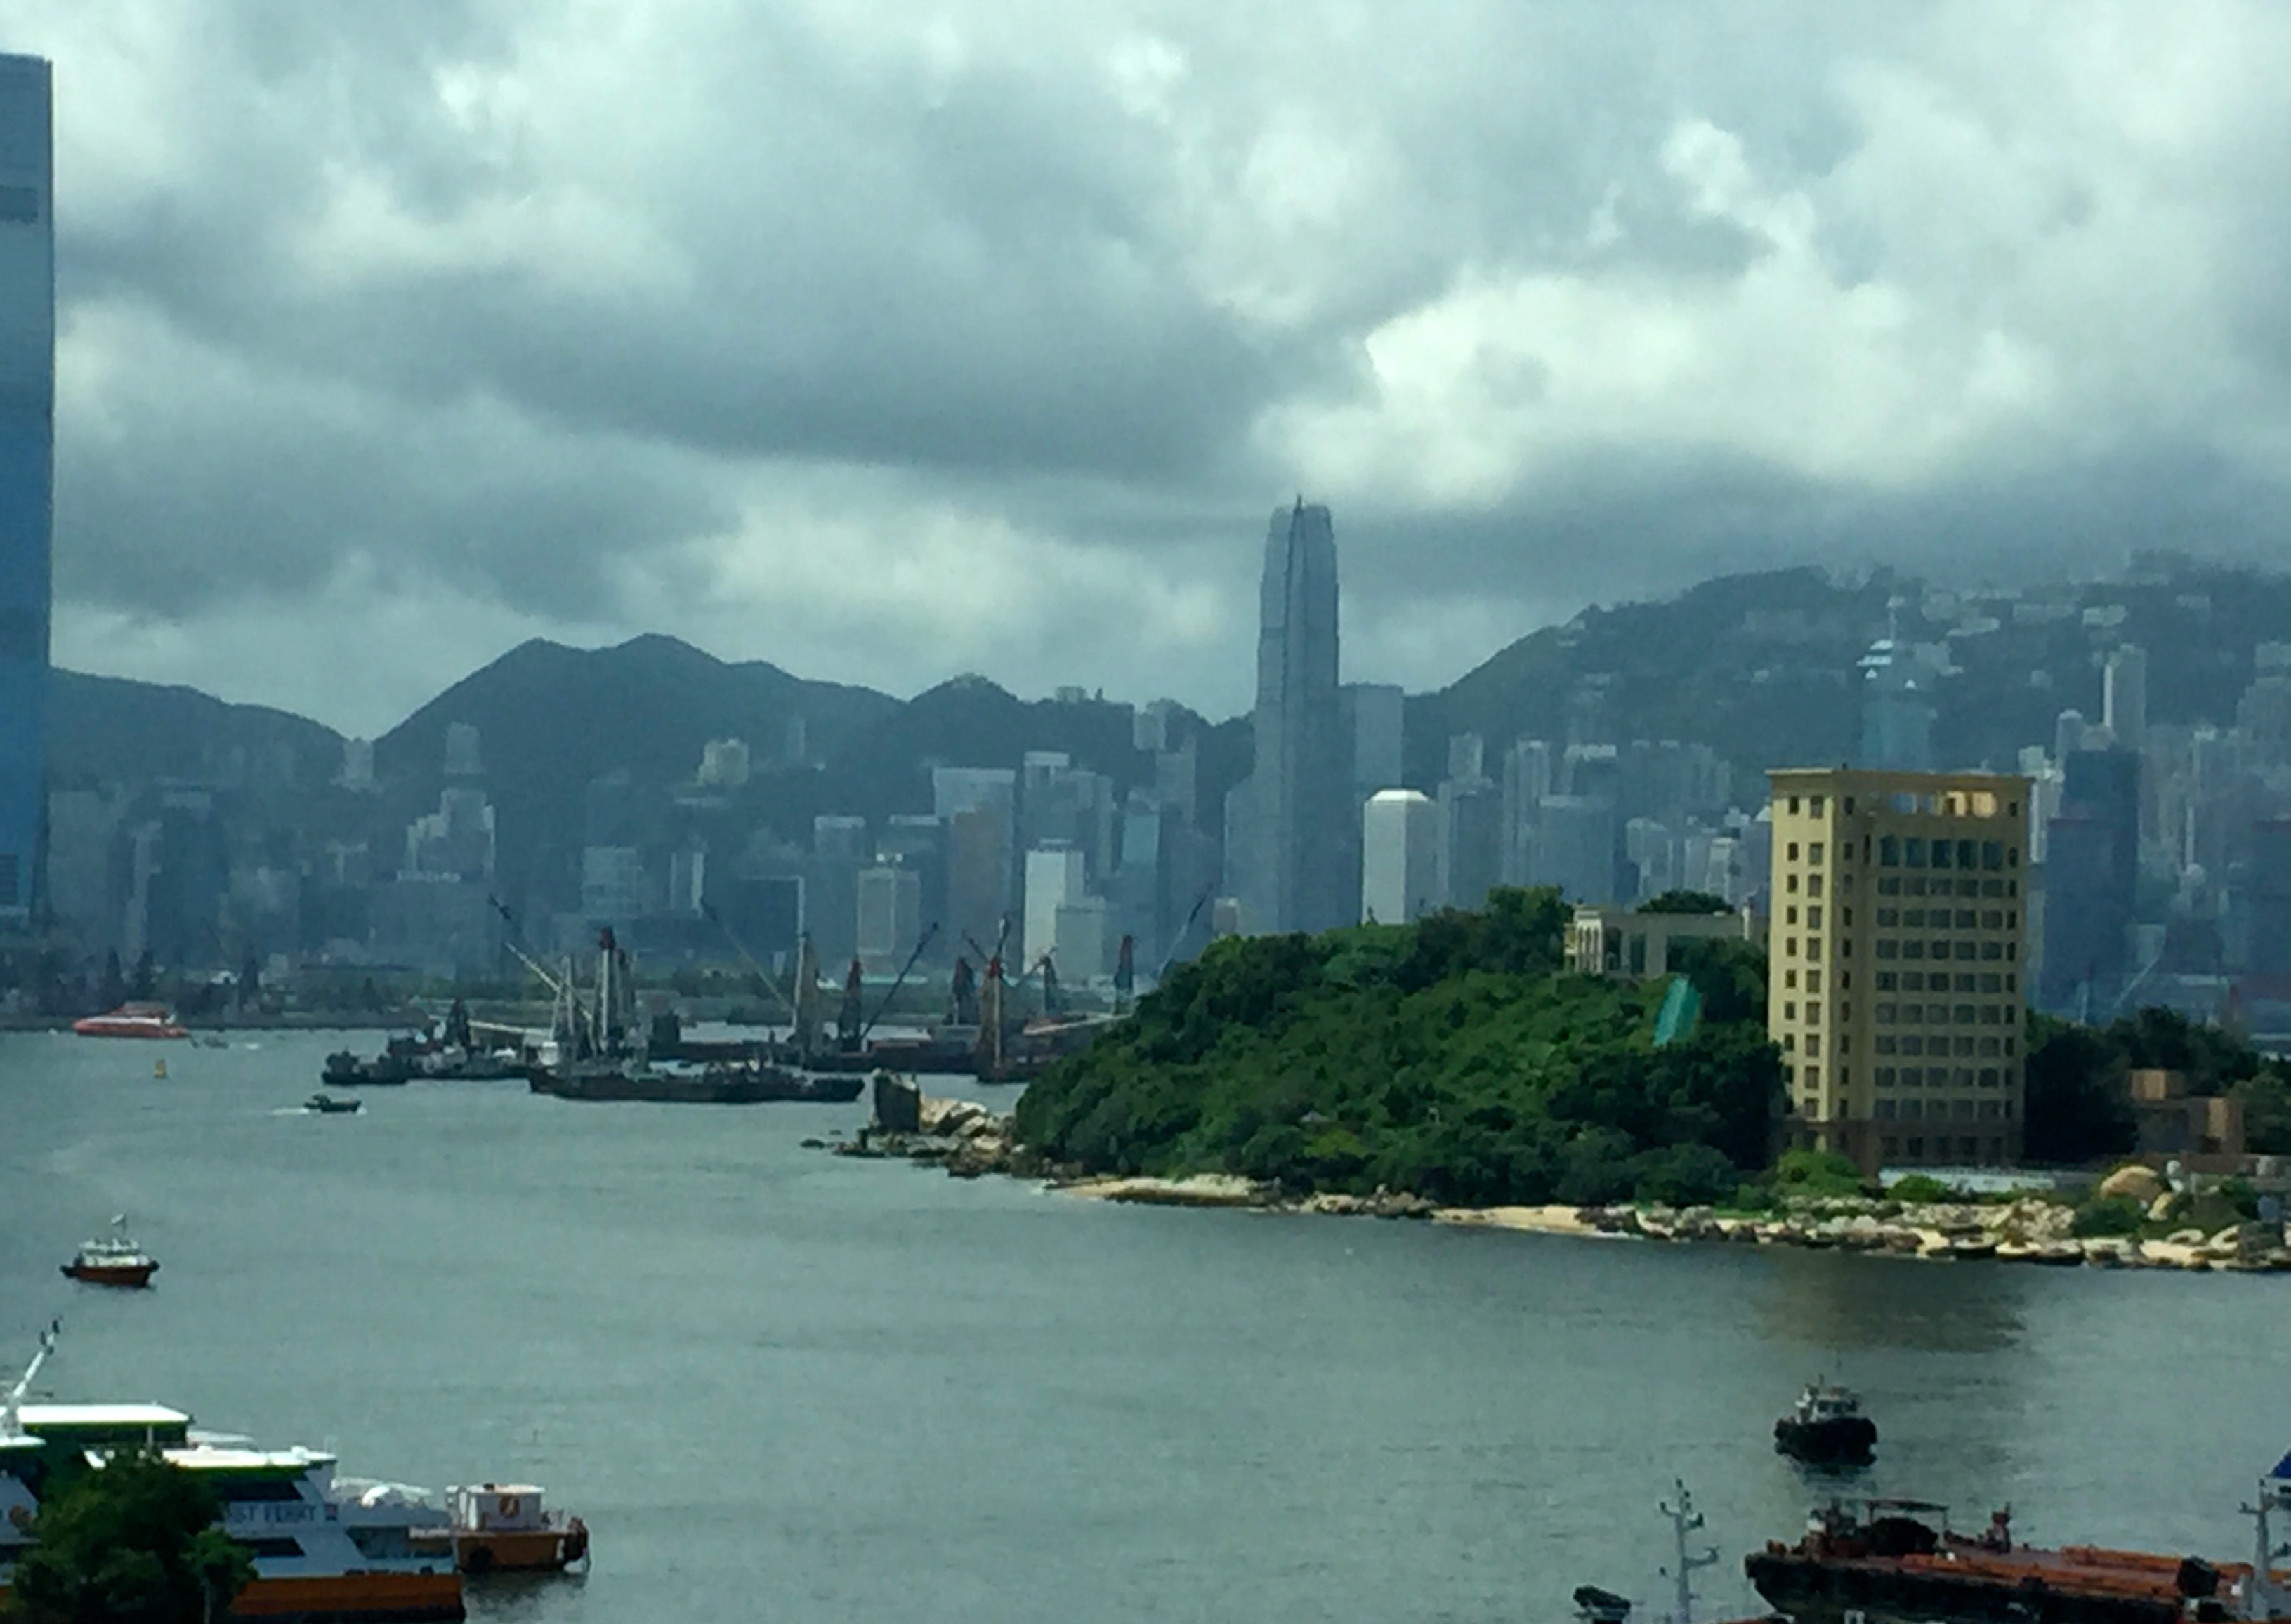 View of Hong Kong via The Potted Boxwood